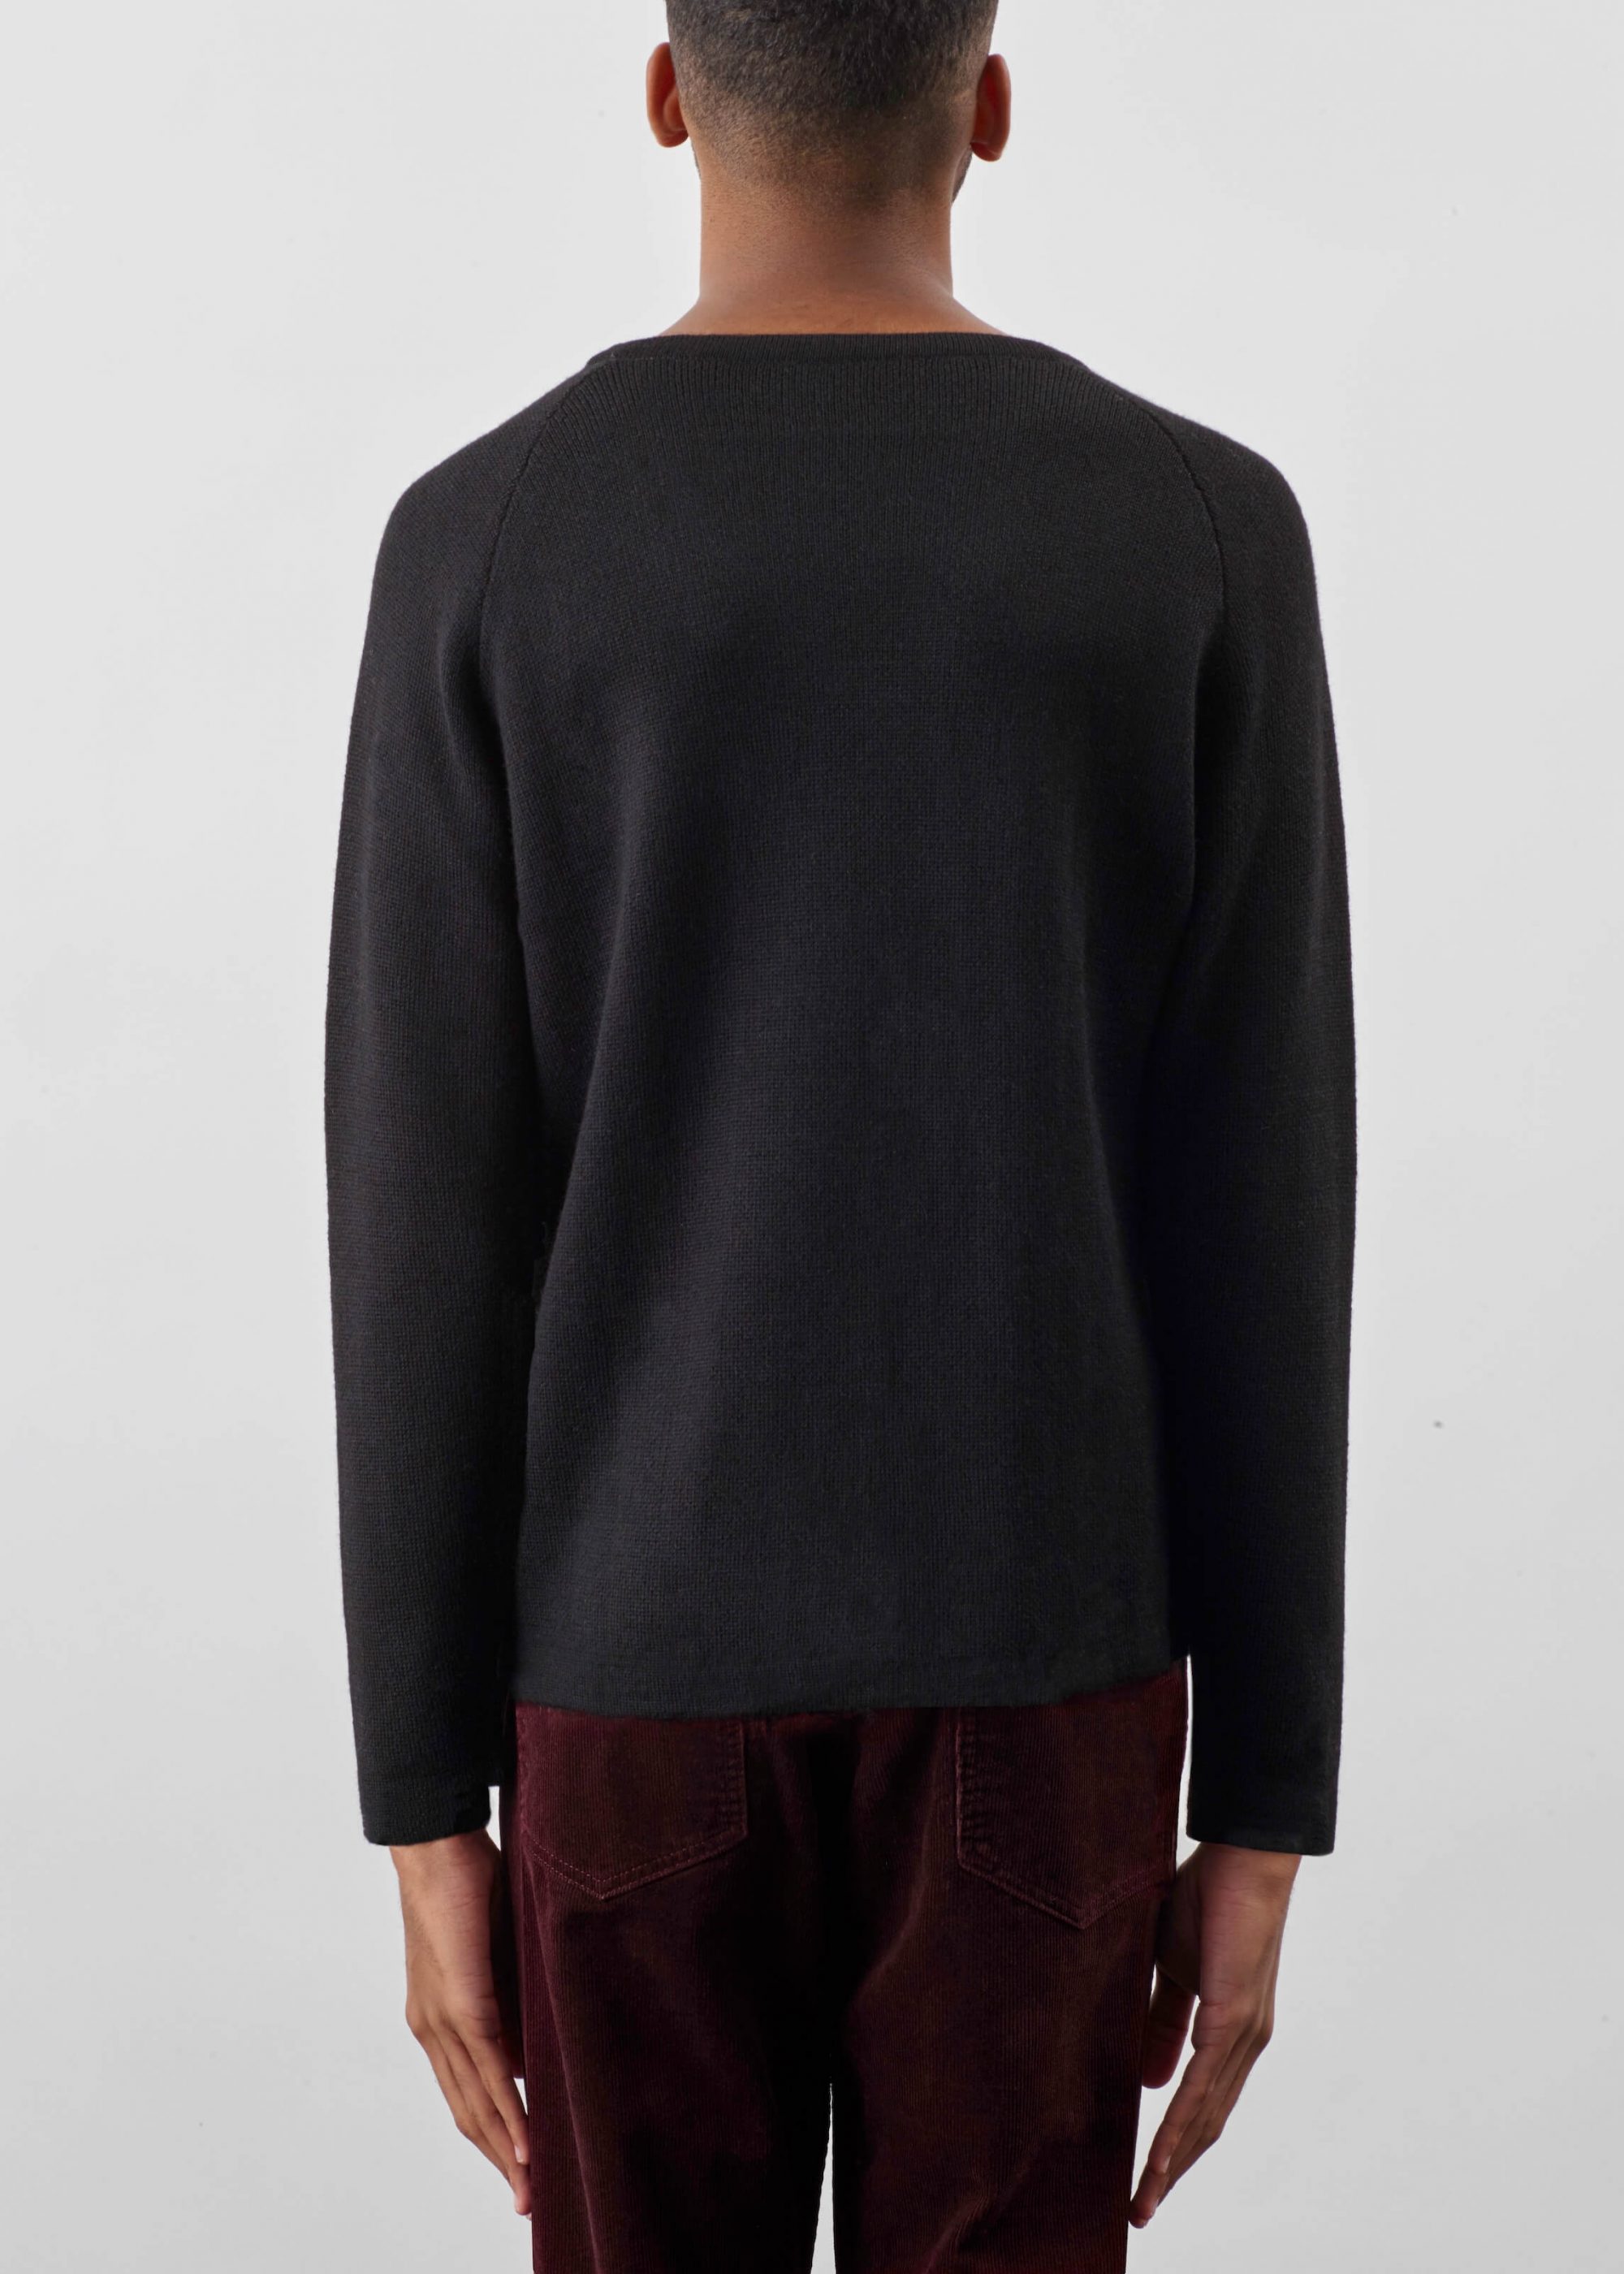 Product image for »Dean« Raglan Sweater Baby Alpaca | Black